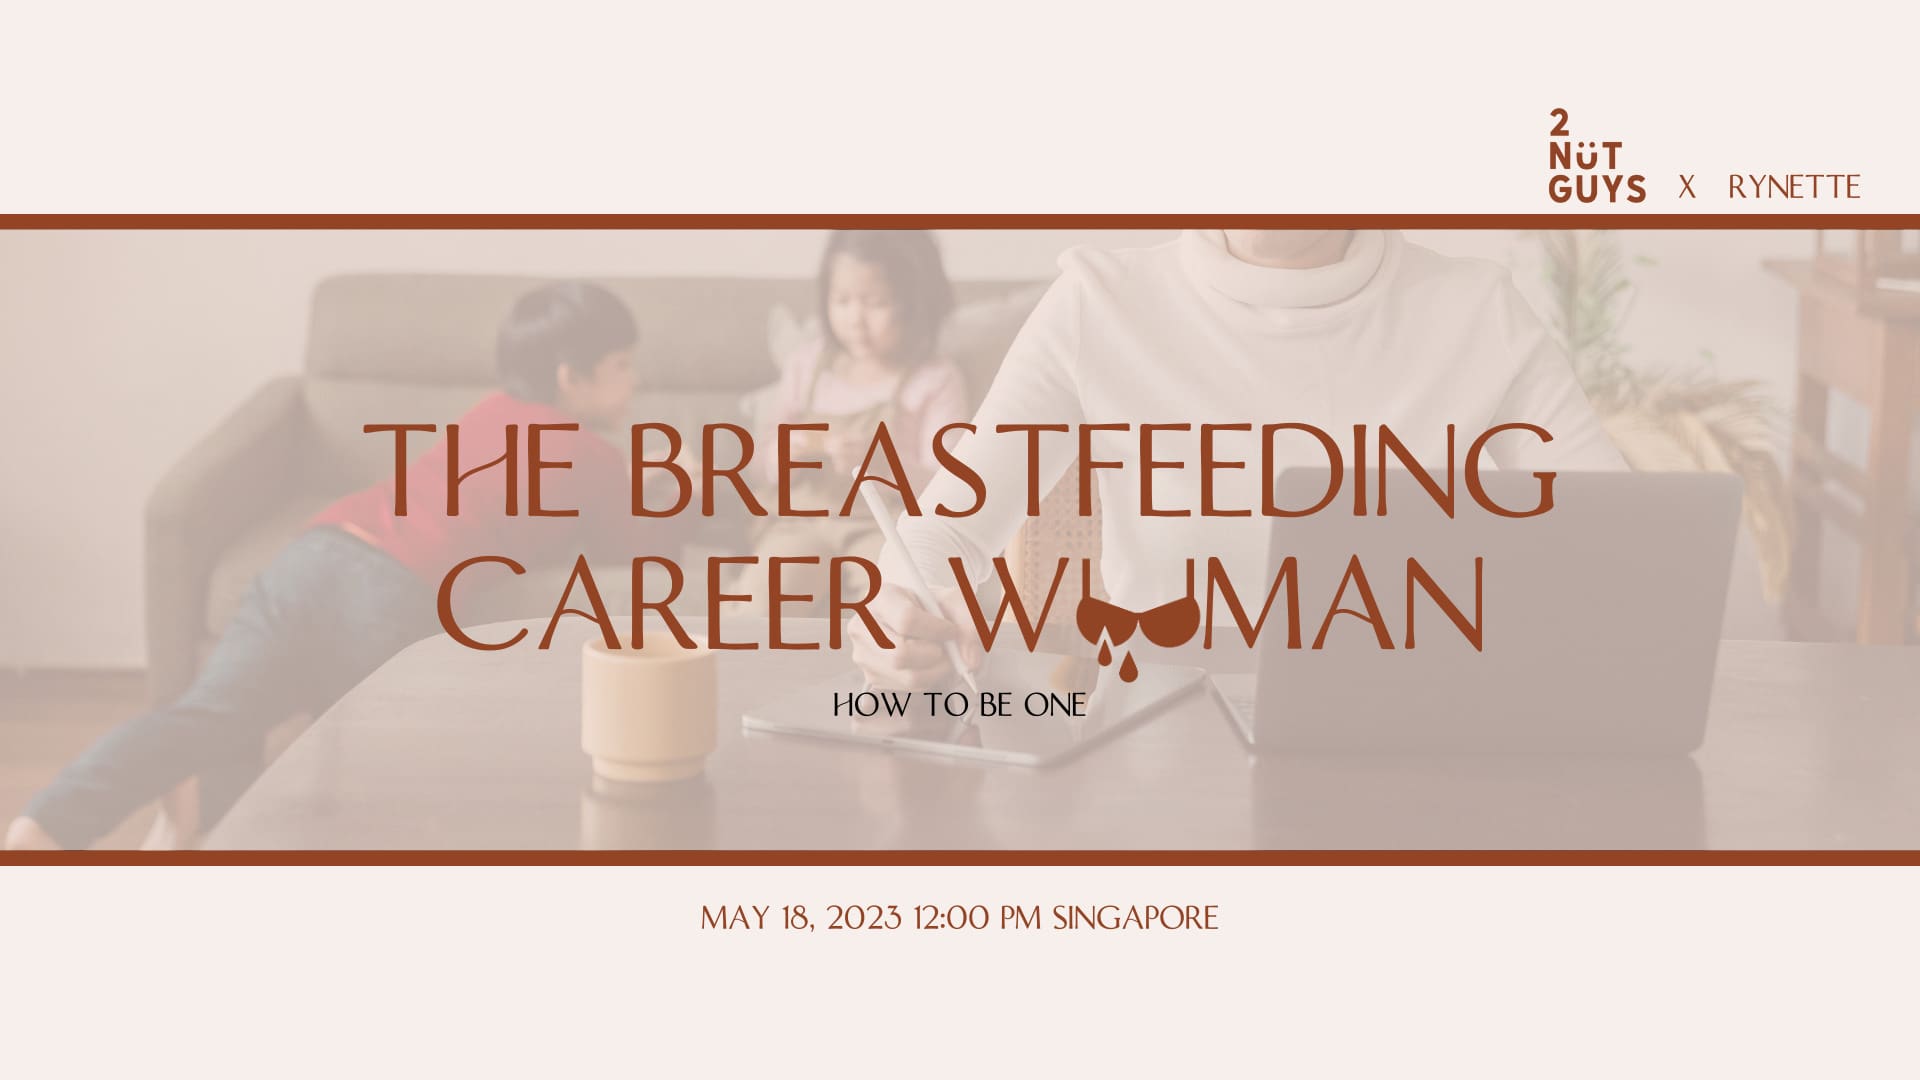 The breastfeeding career woman 10 breastfeeding career woman